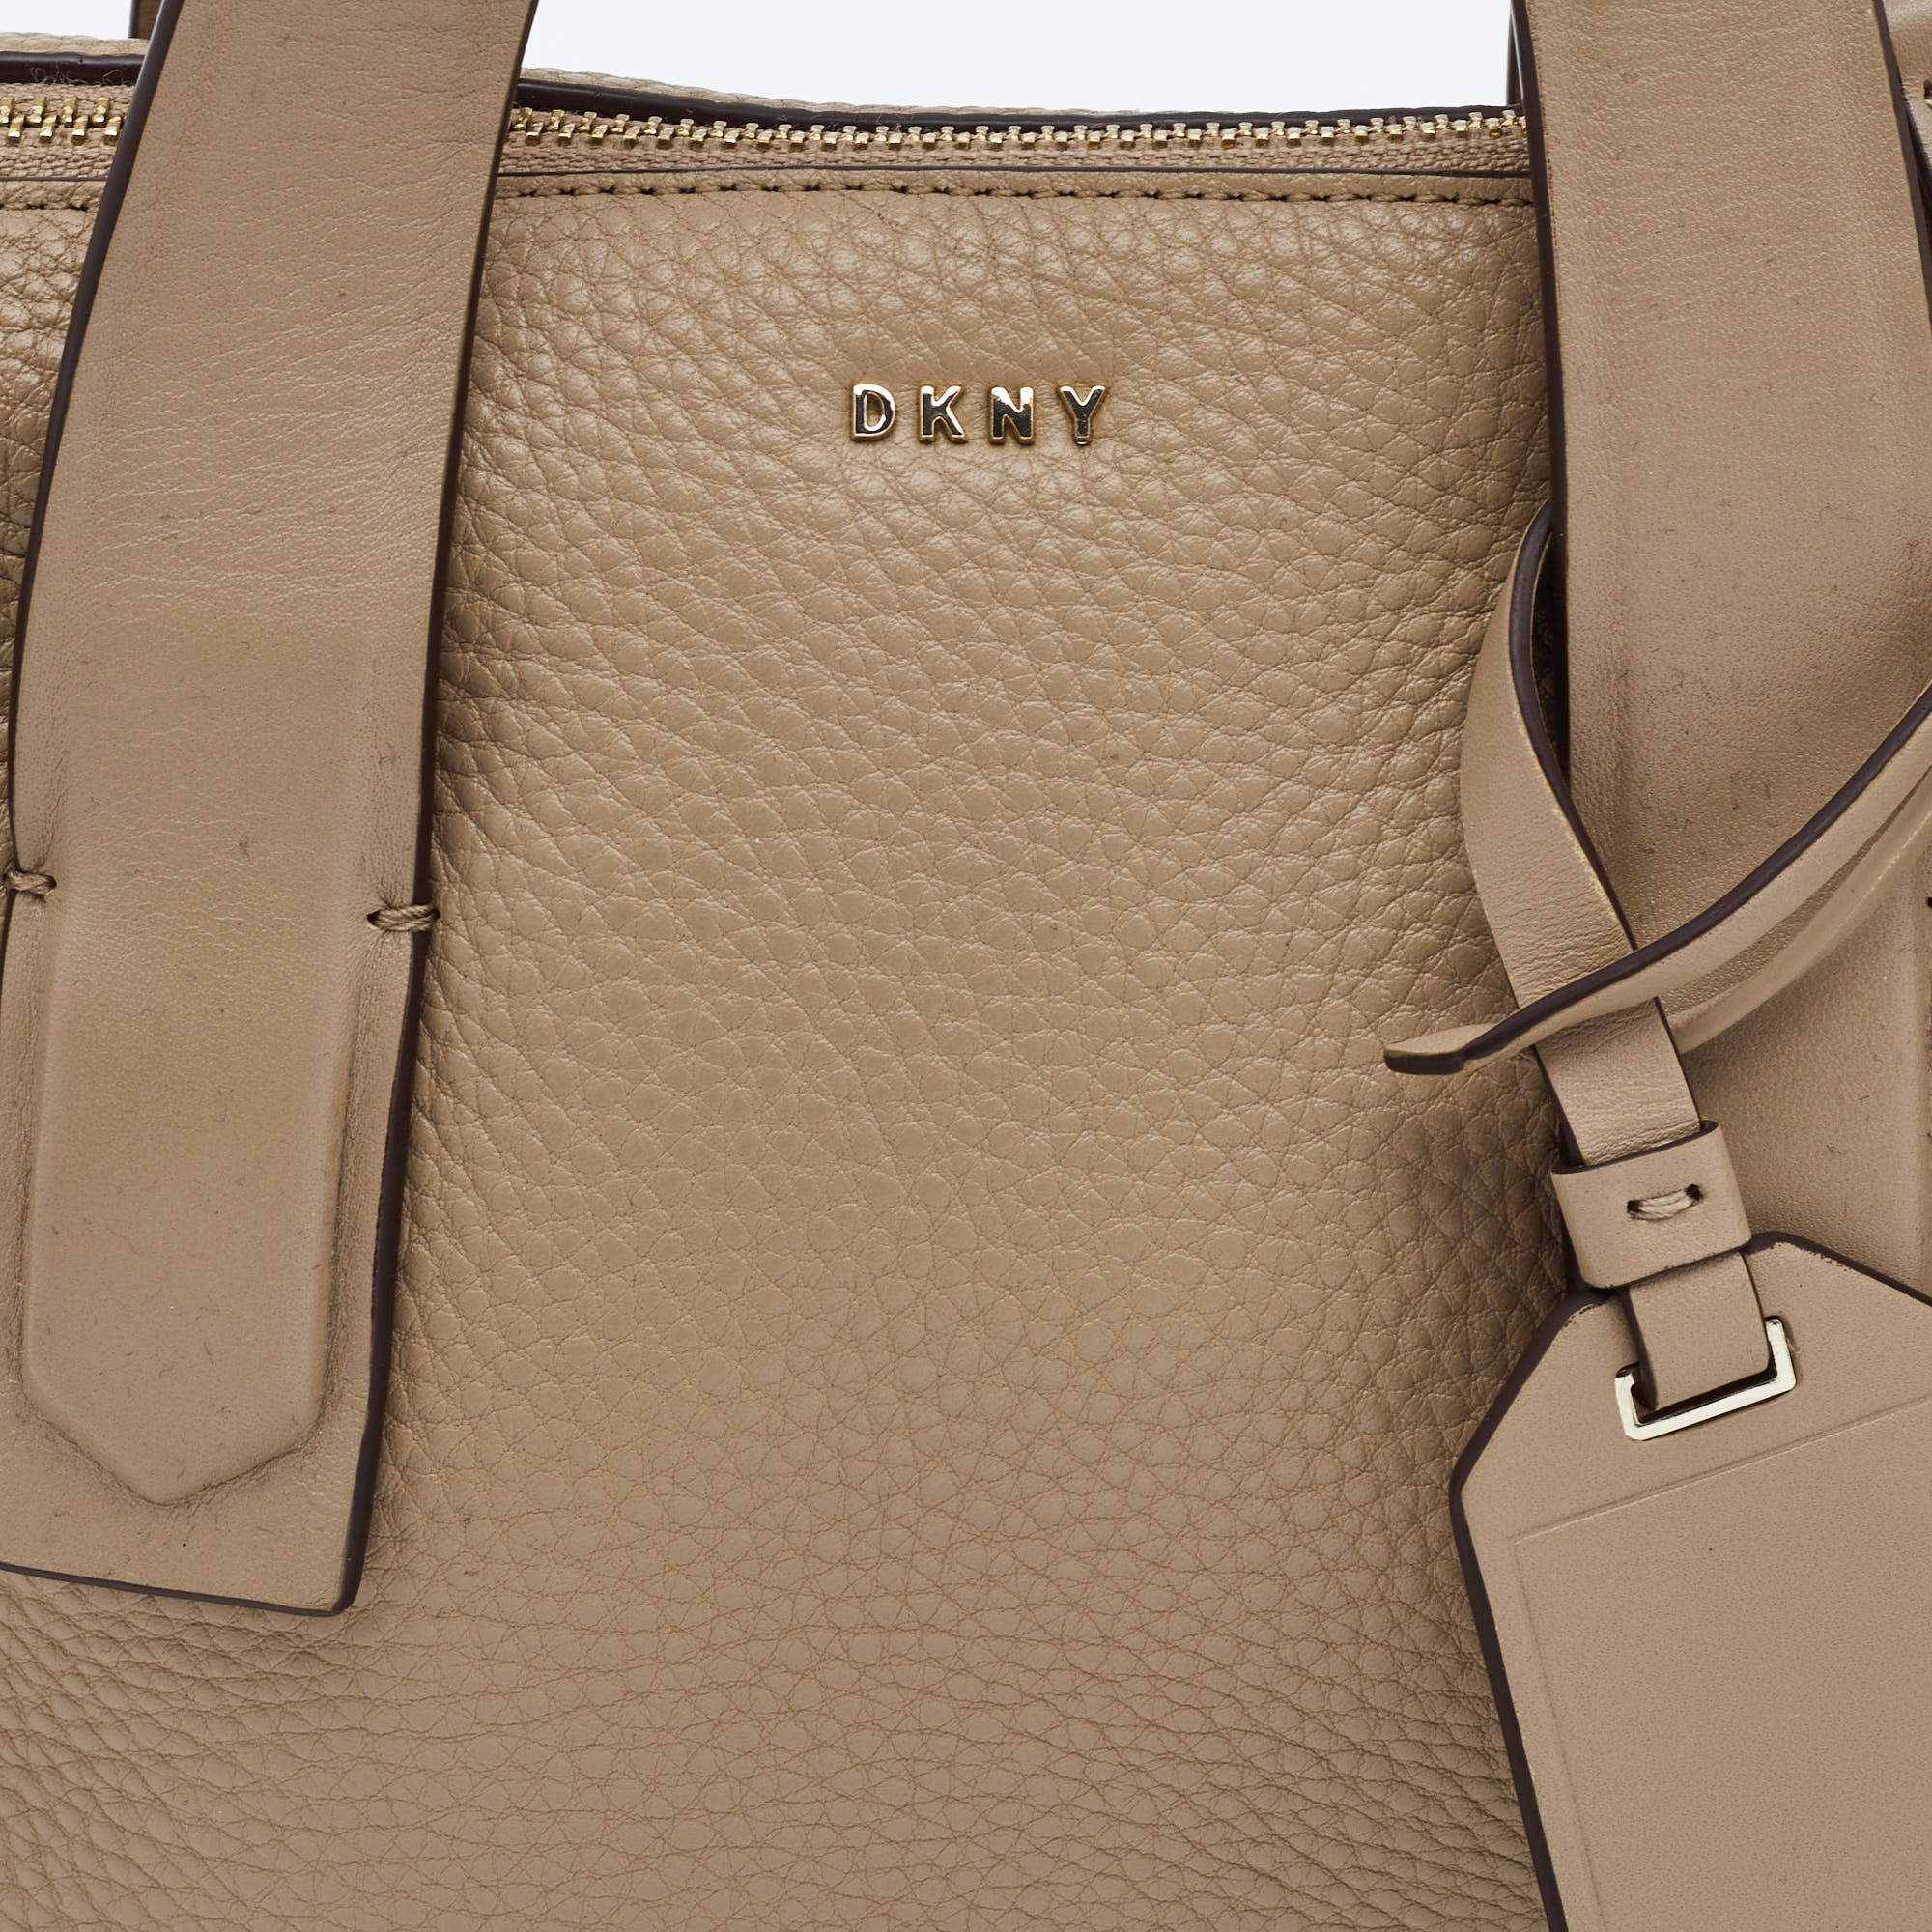 DKNY Beige Leather Zip Boston Bag